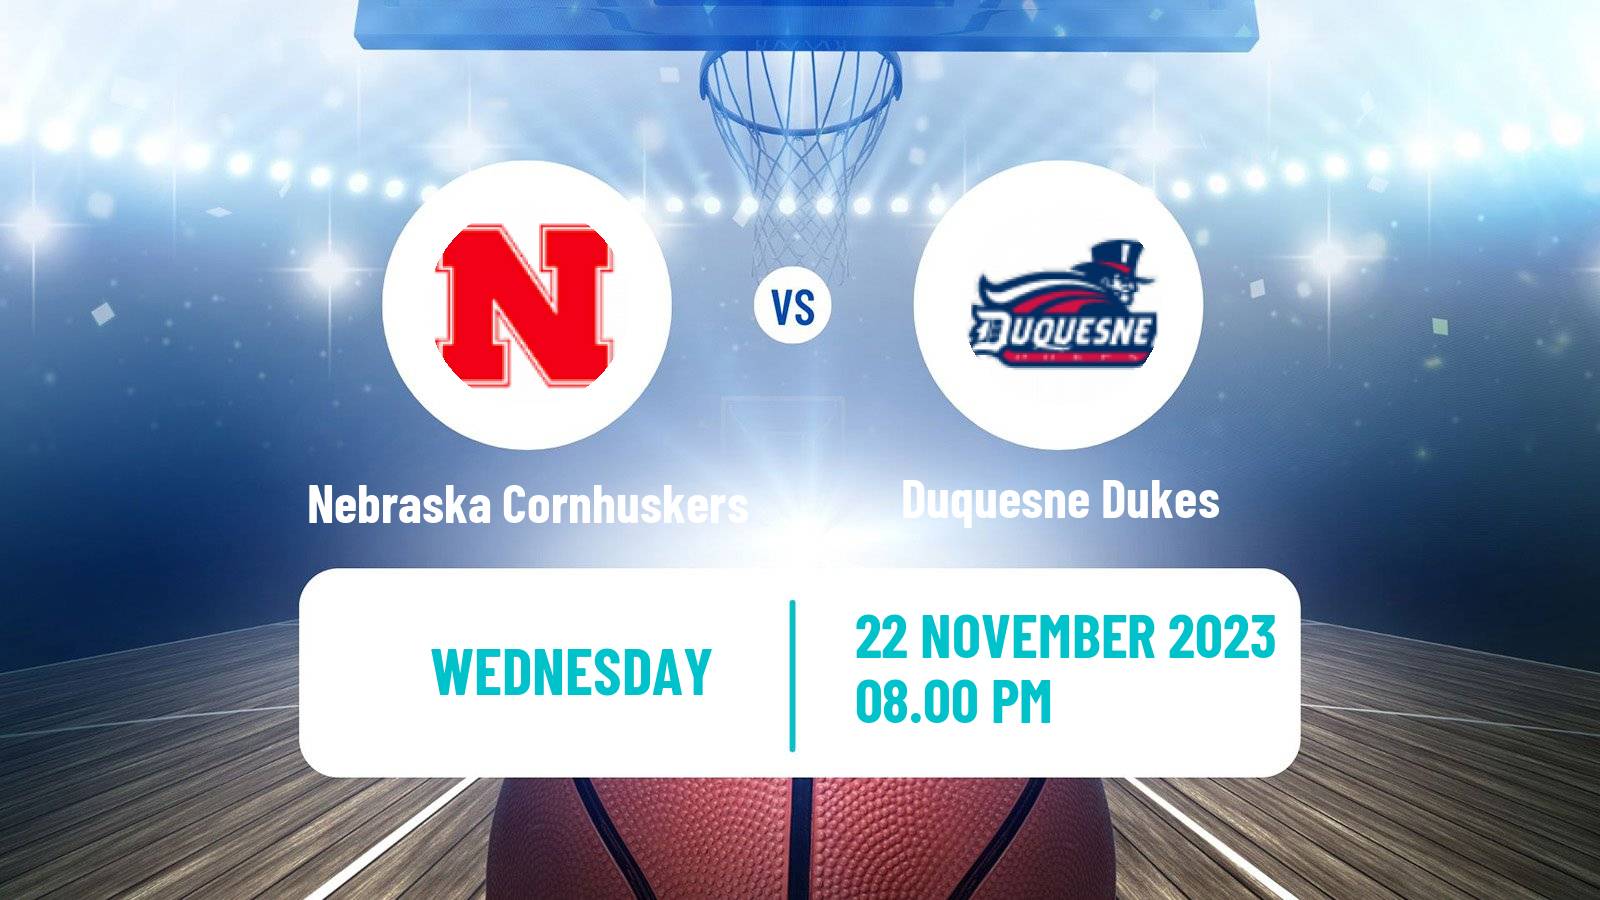 Basketball NCAA College Basketball Nebraska Cornhuskers - Duquesne Dukes